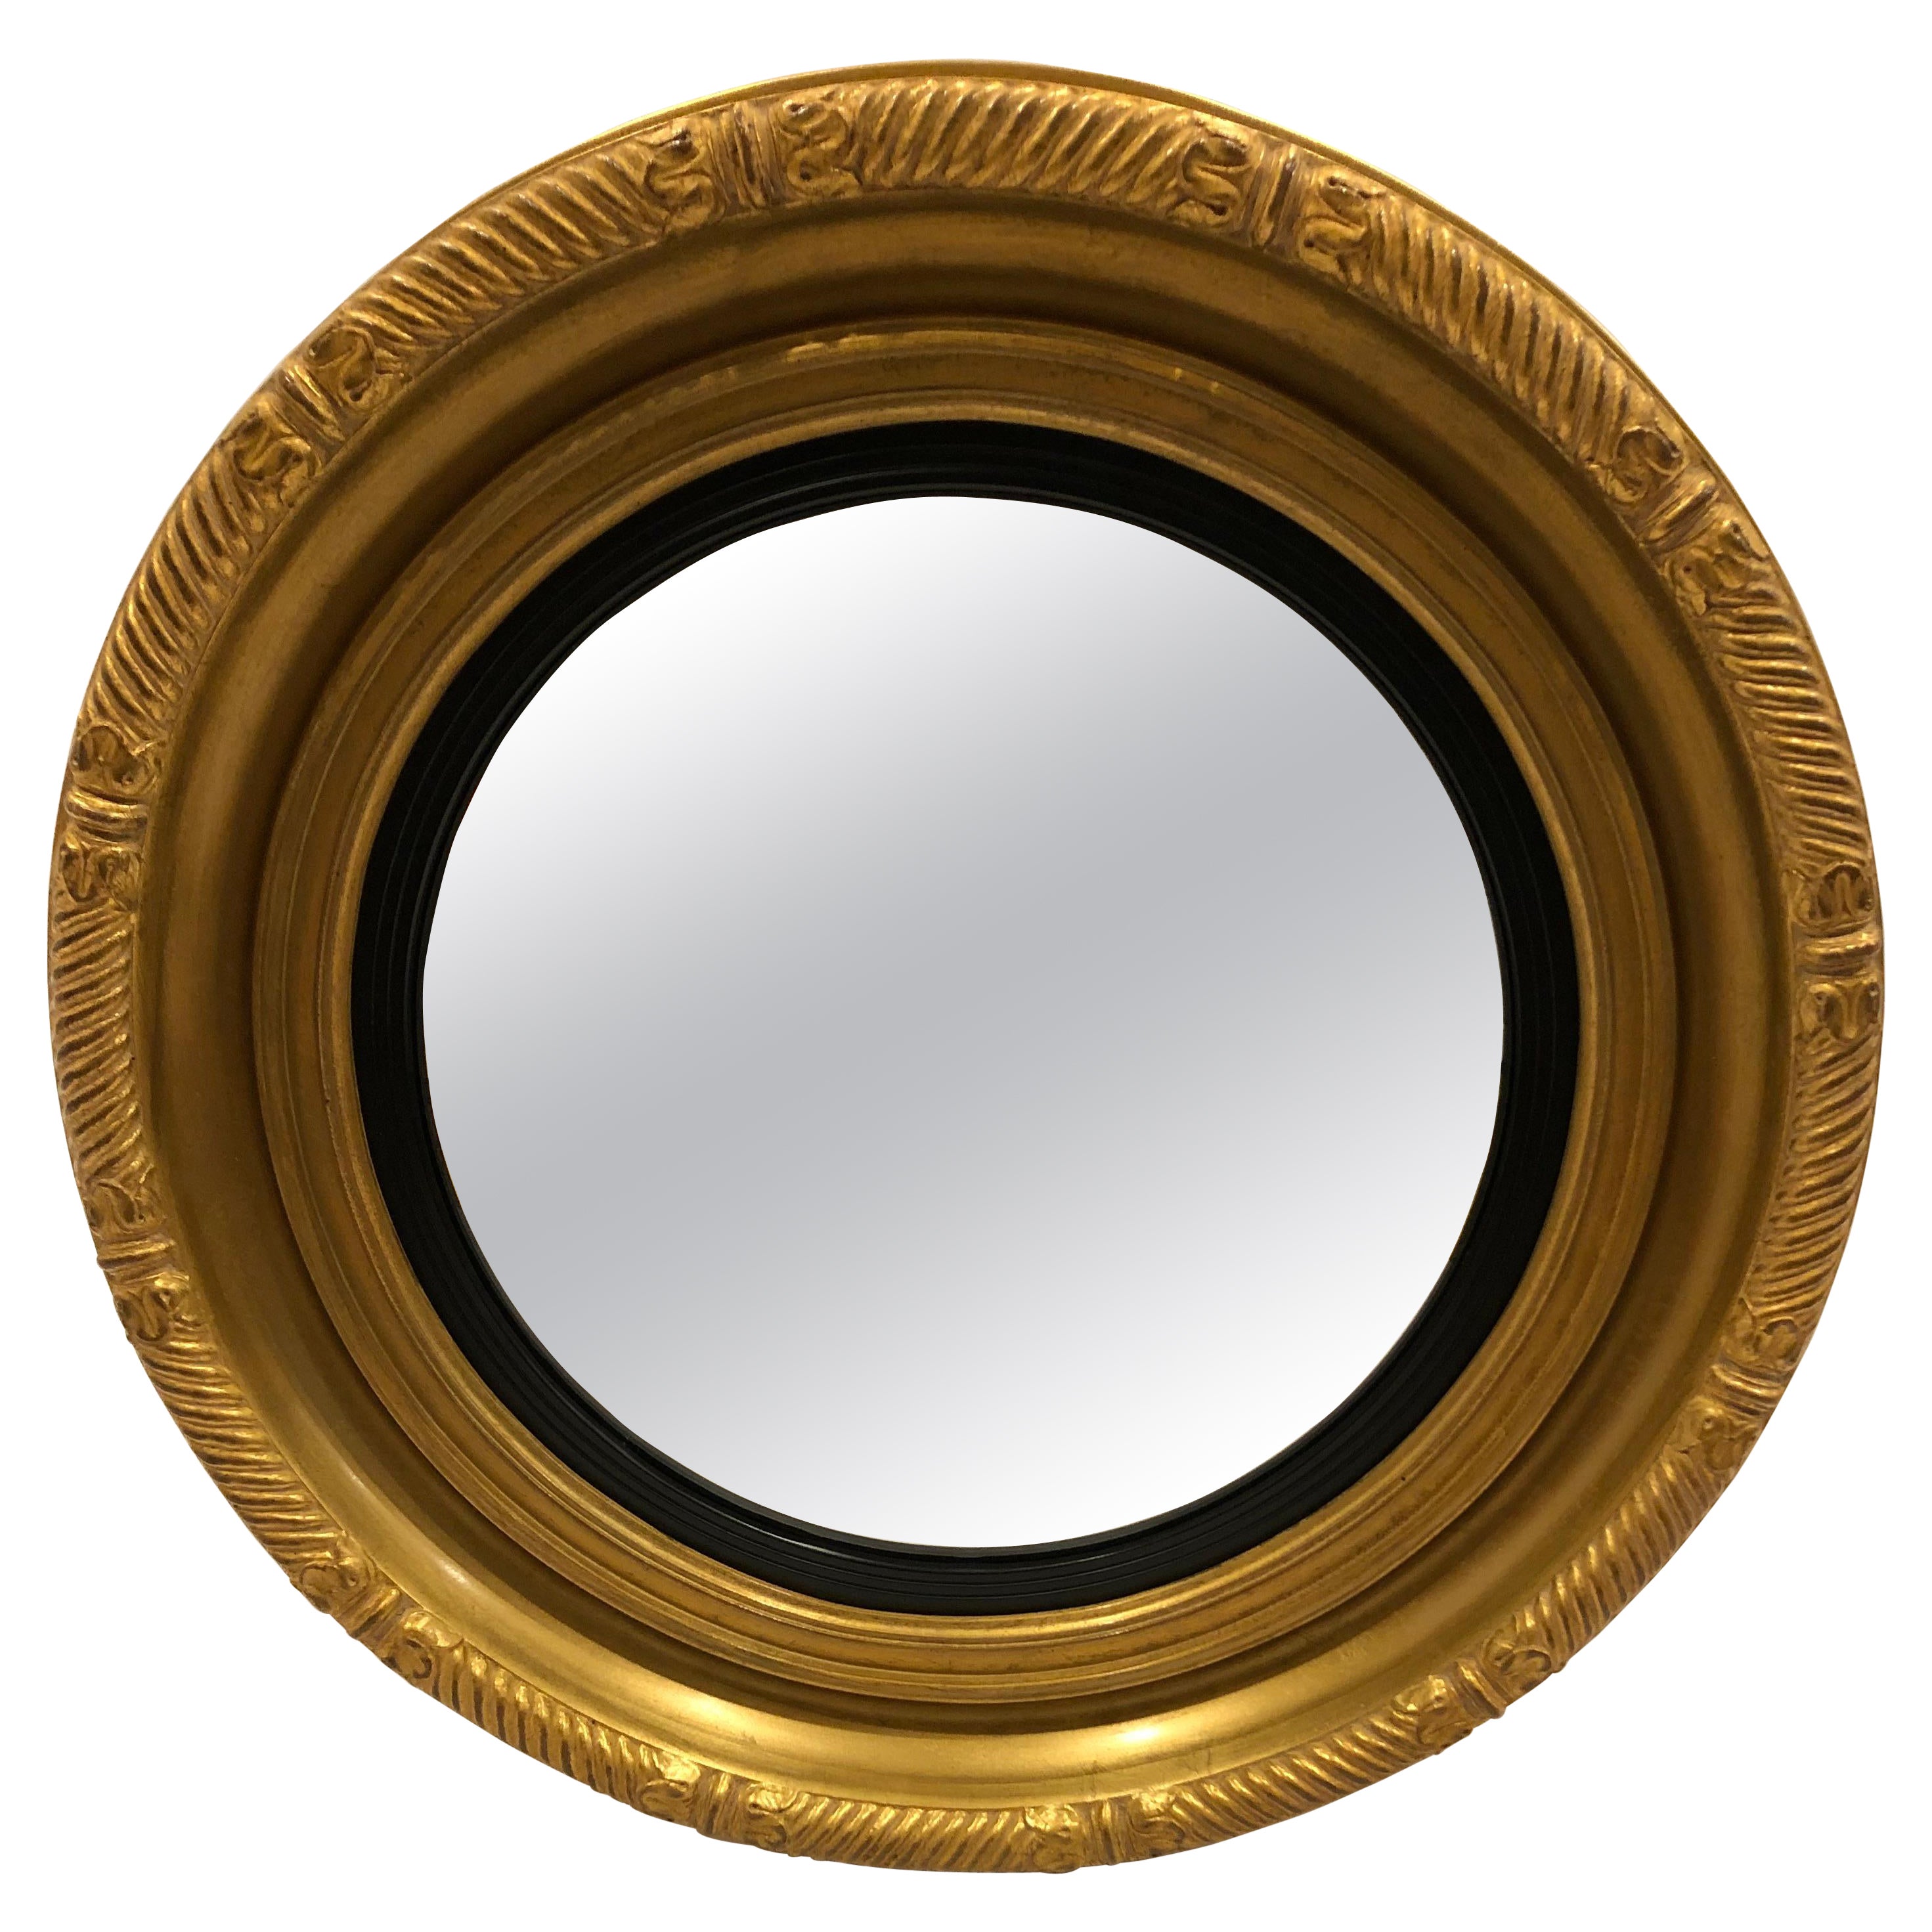 Handsome Round Convex Gilded Regency Style Bullseye Mirror